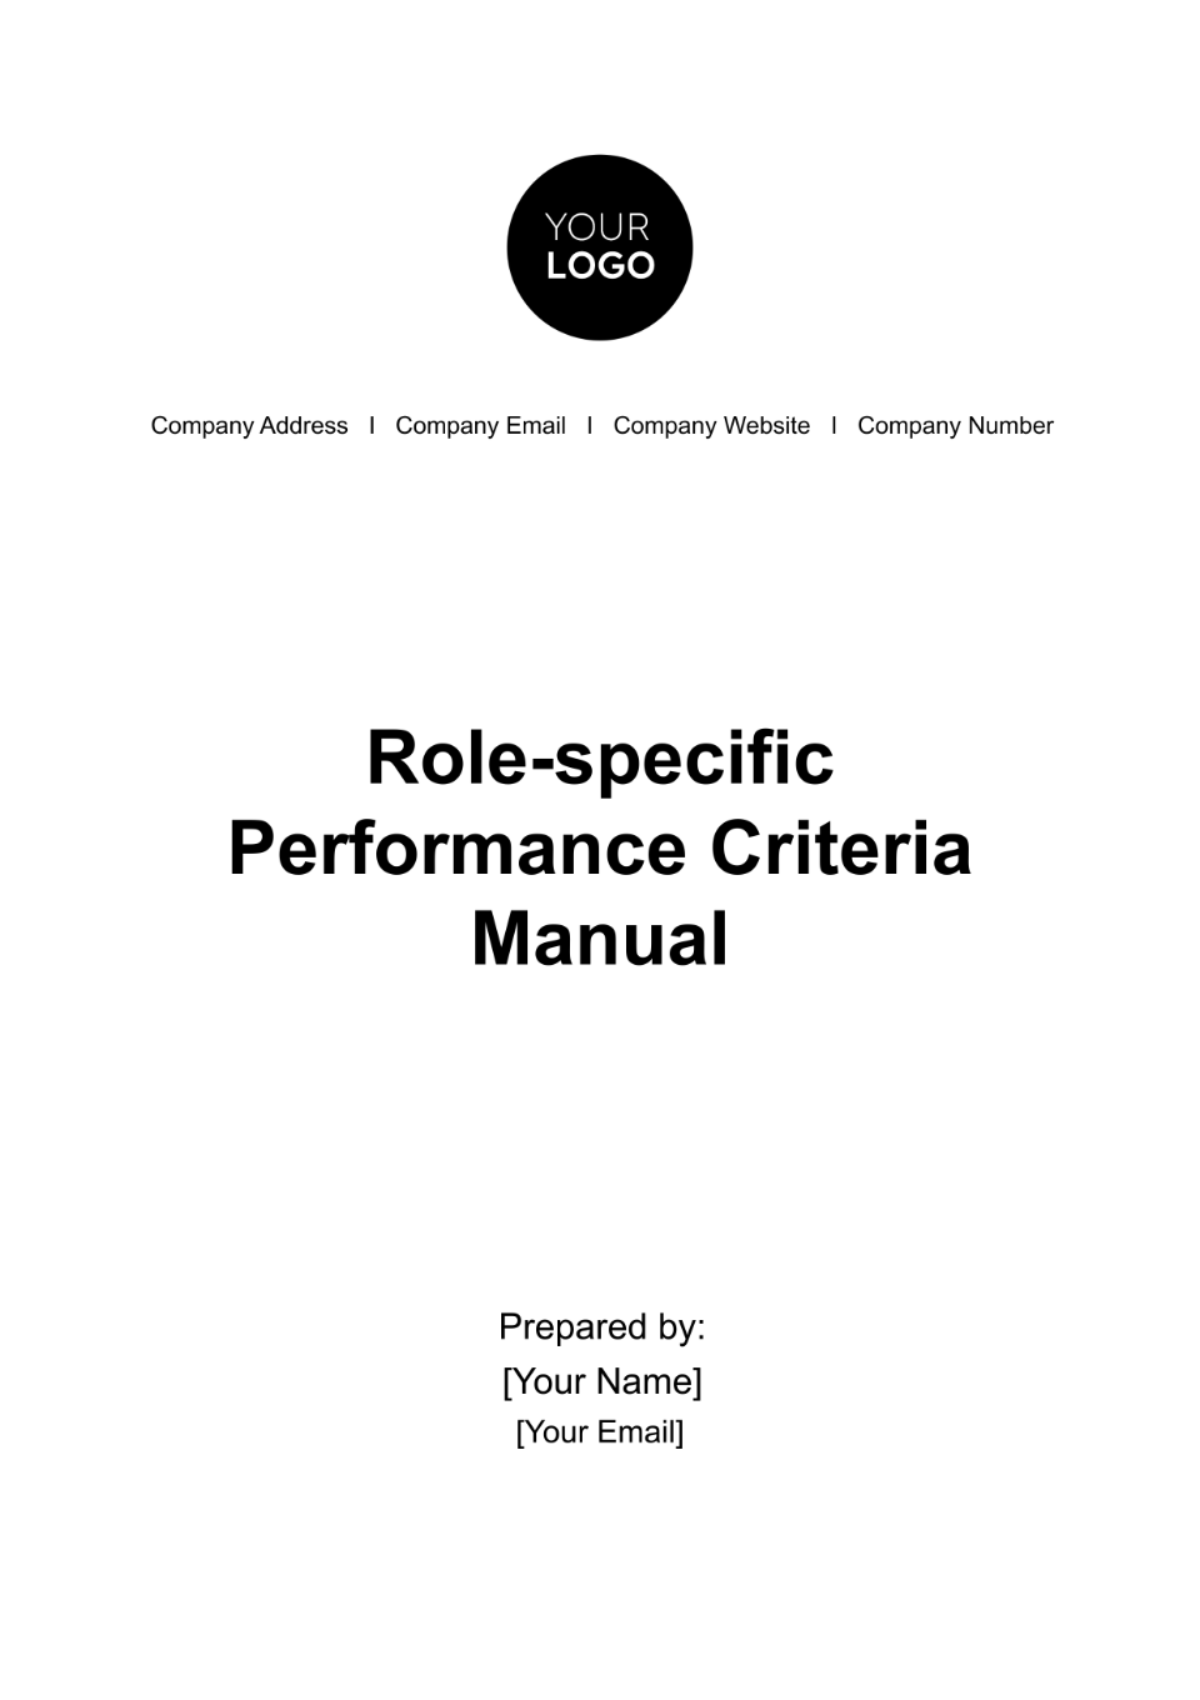 Role-specific Performance Criteria Manual HR Template